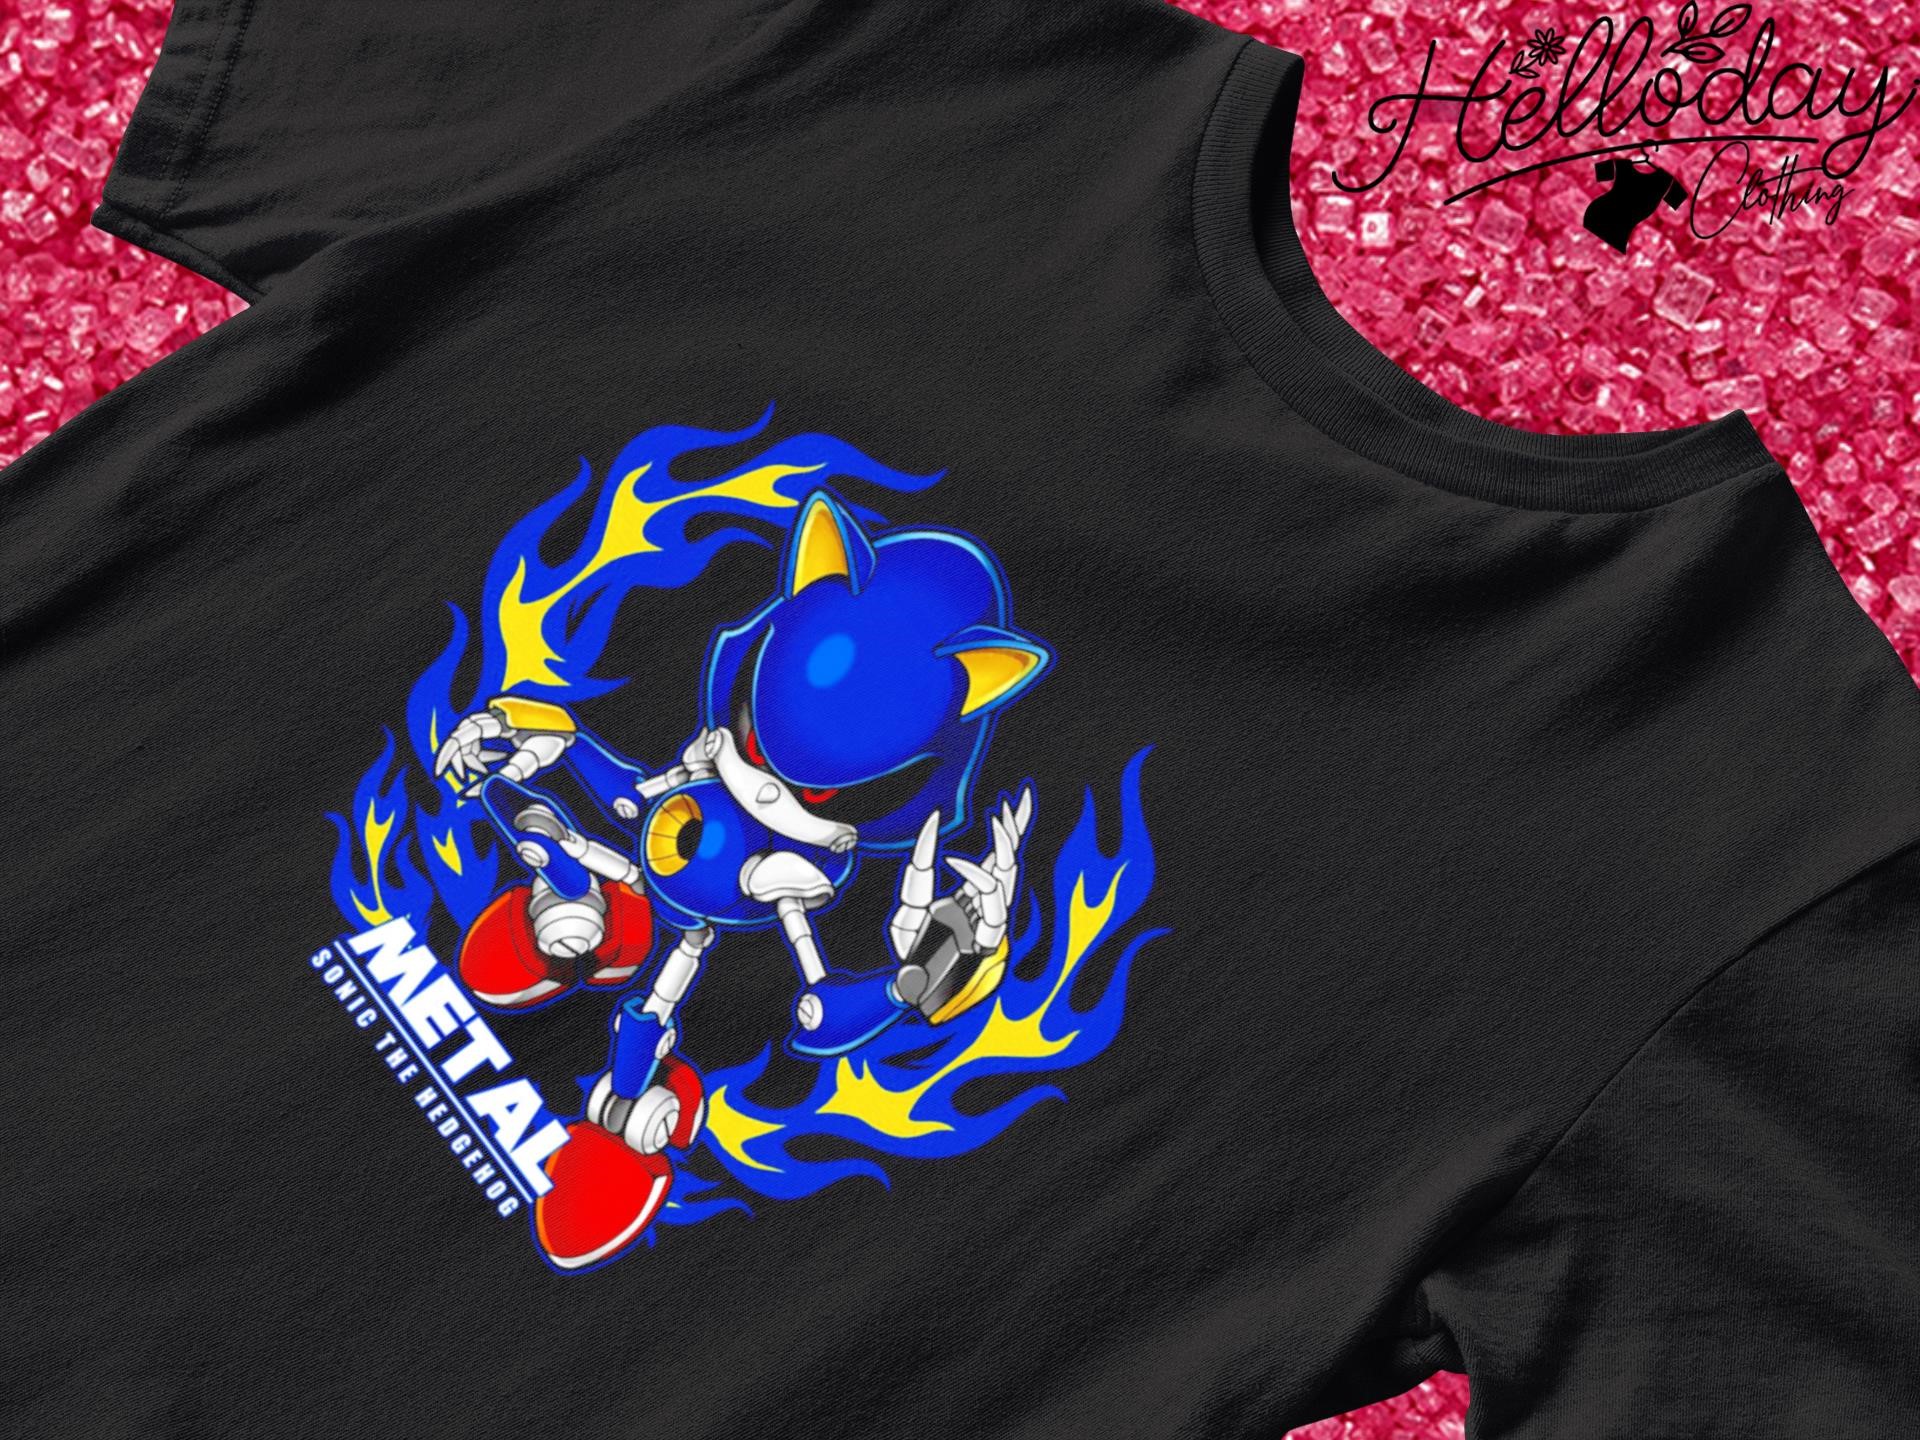 Metal Sonic the hedgehog metal flame shirt